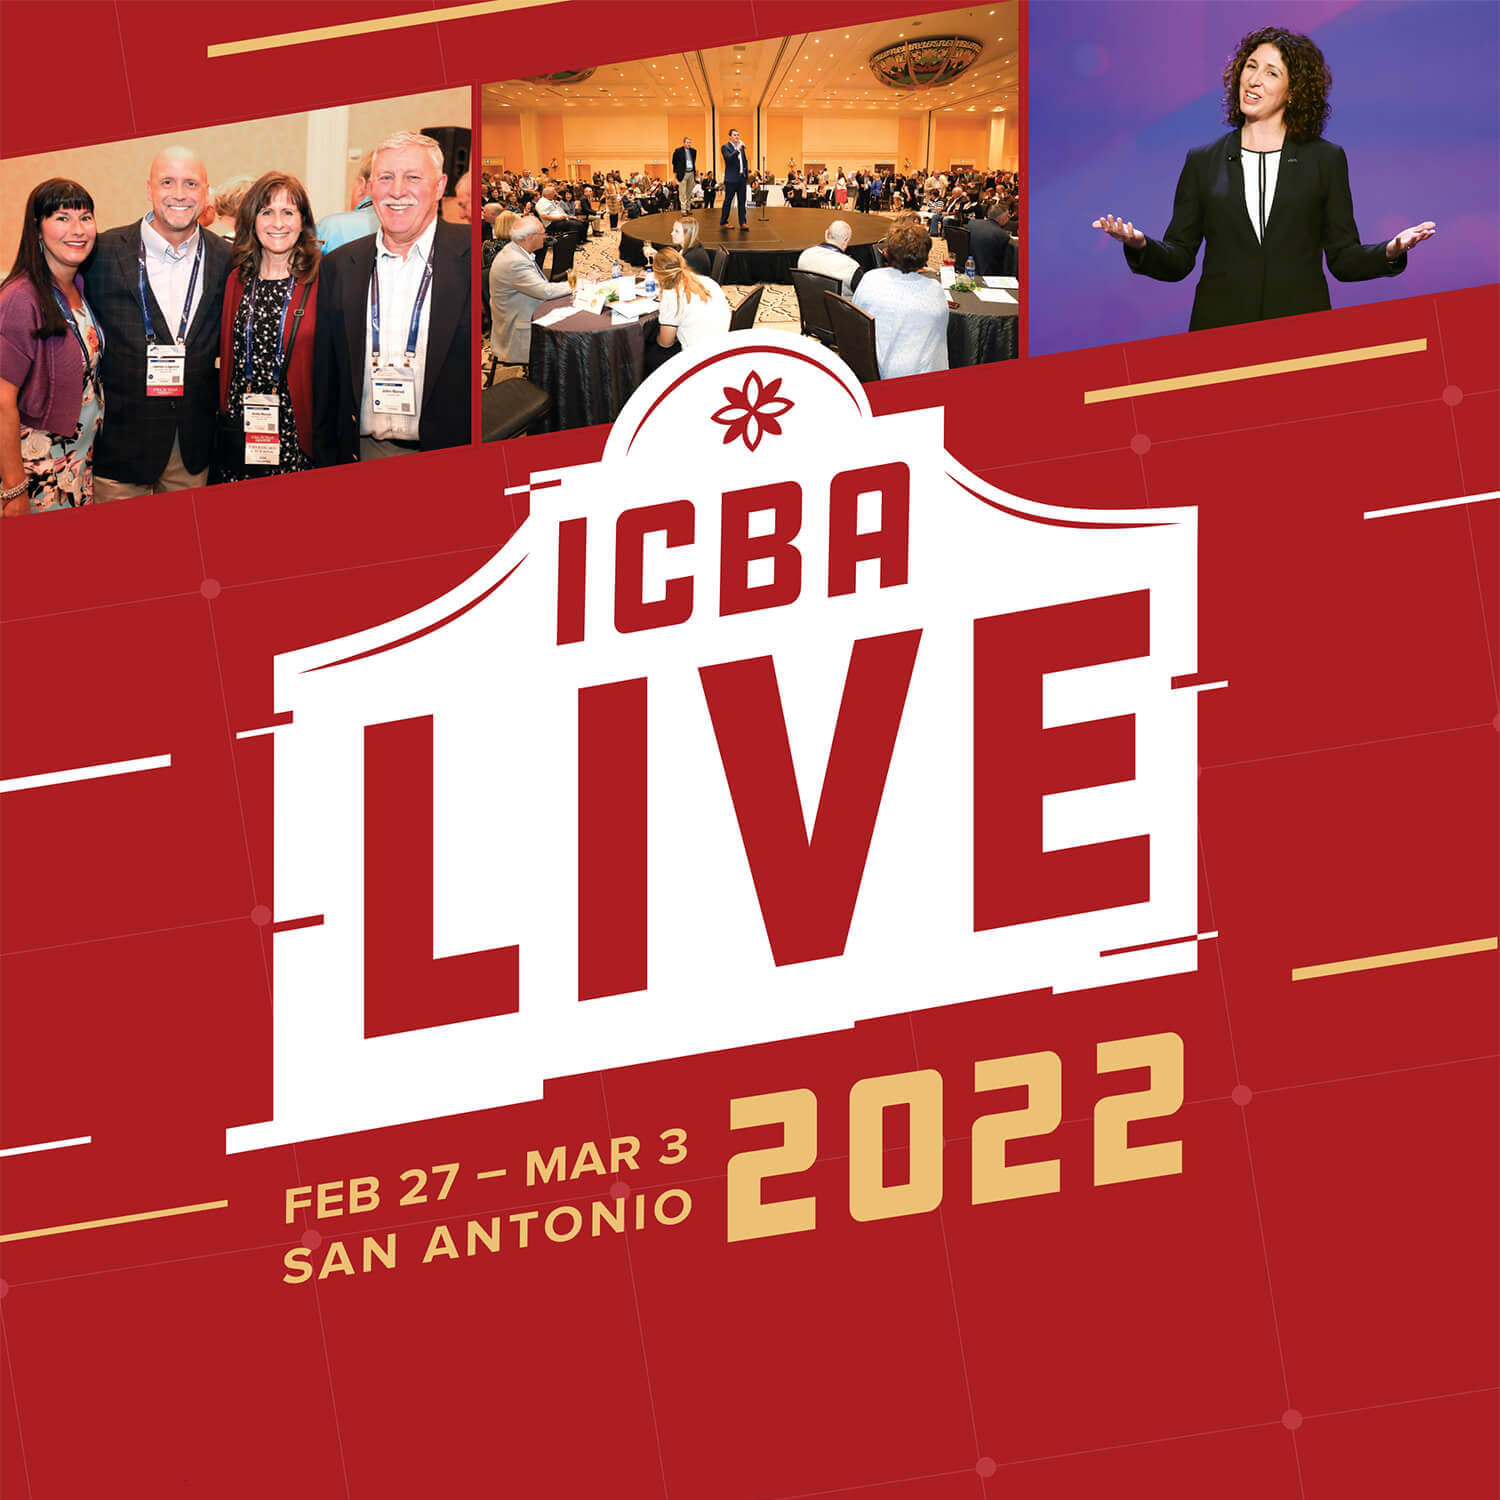 ICBA Live Square Event Photos